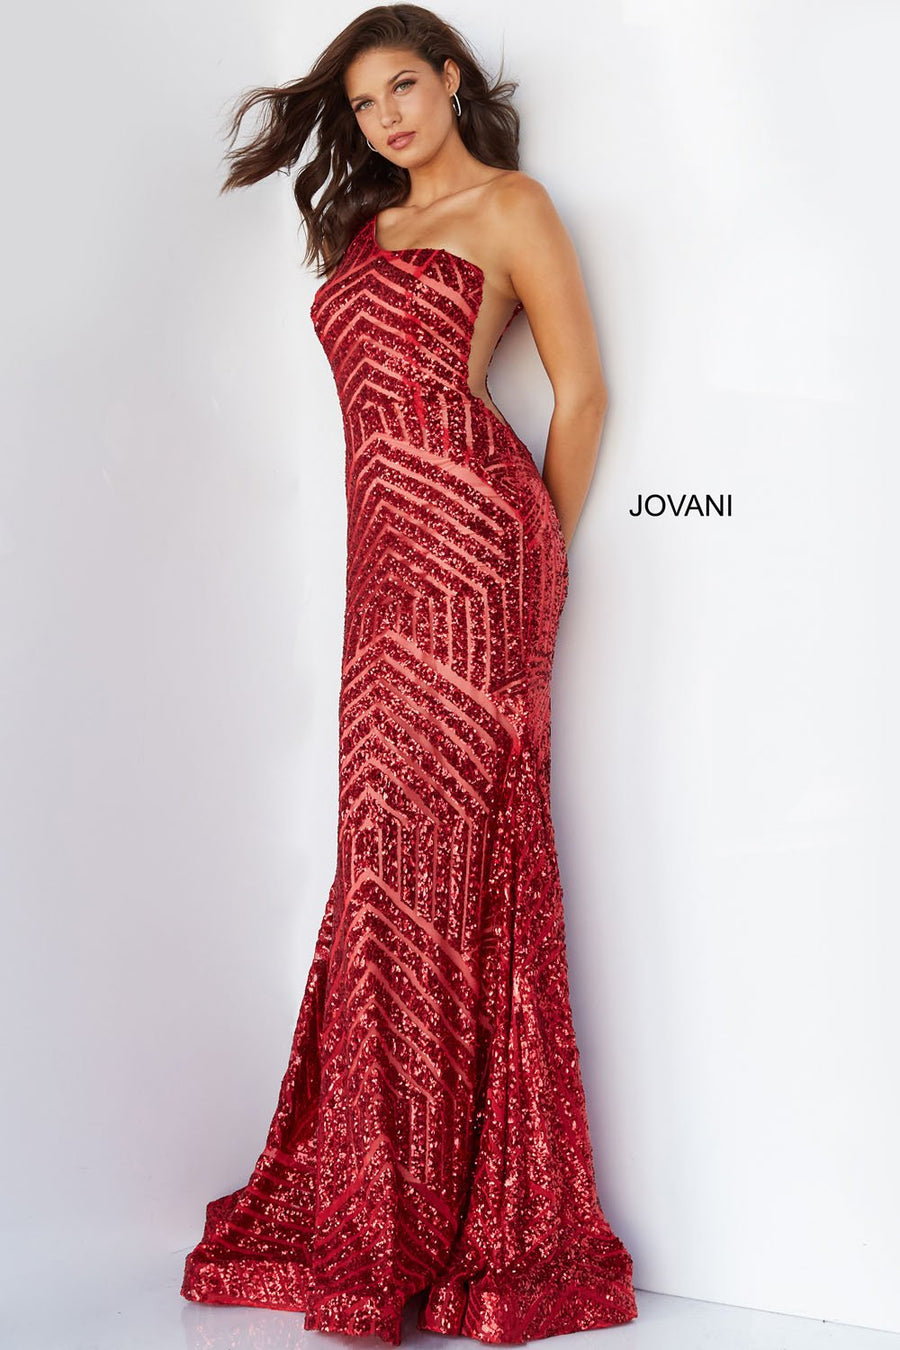 Jovani 06017 Red prom dresses images.